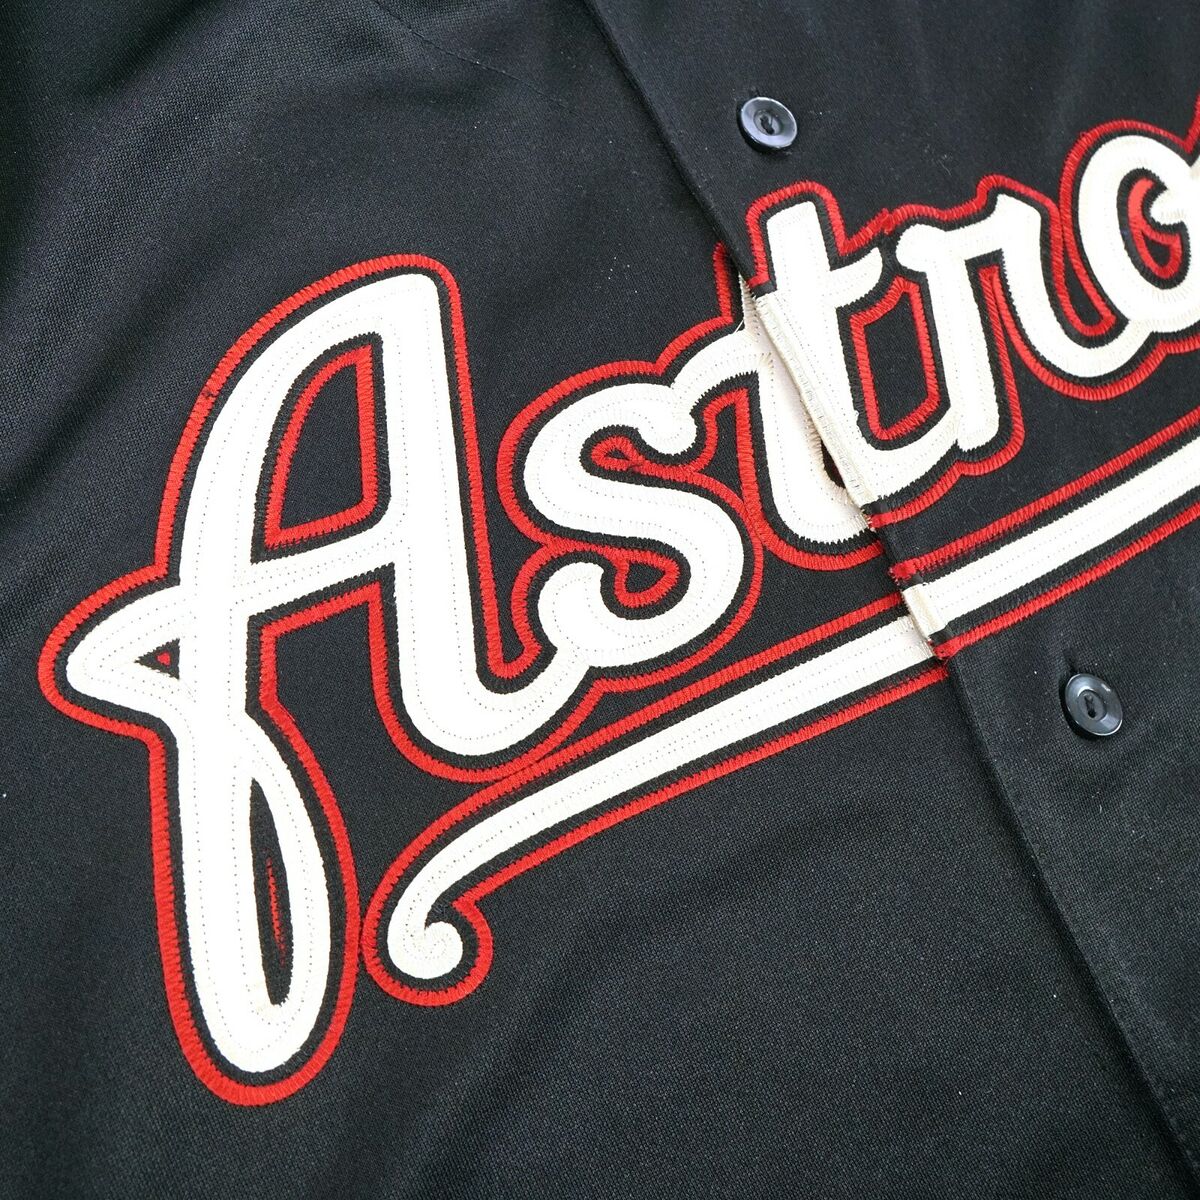 MAJESTIC  ROY OSWALT Houston Astros 2001 Throwback Alternate Baseball  Jersey